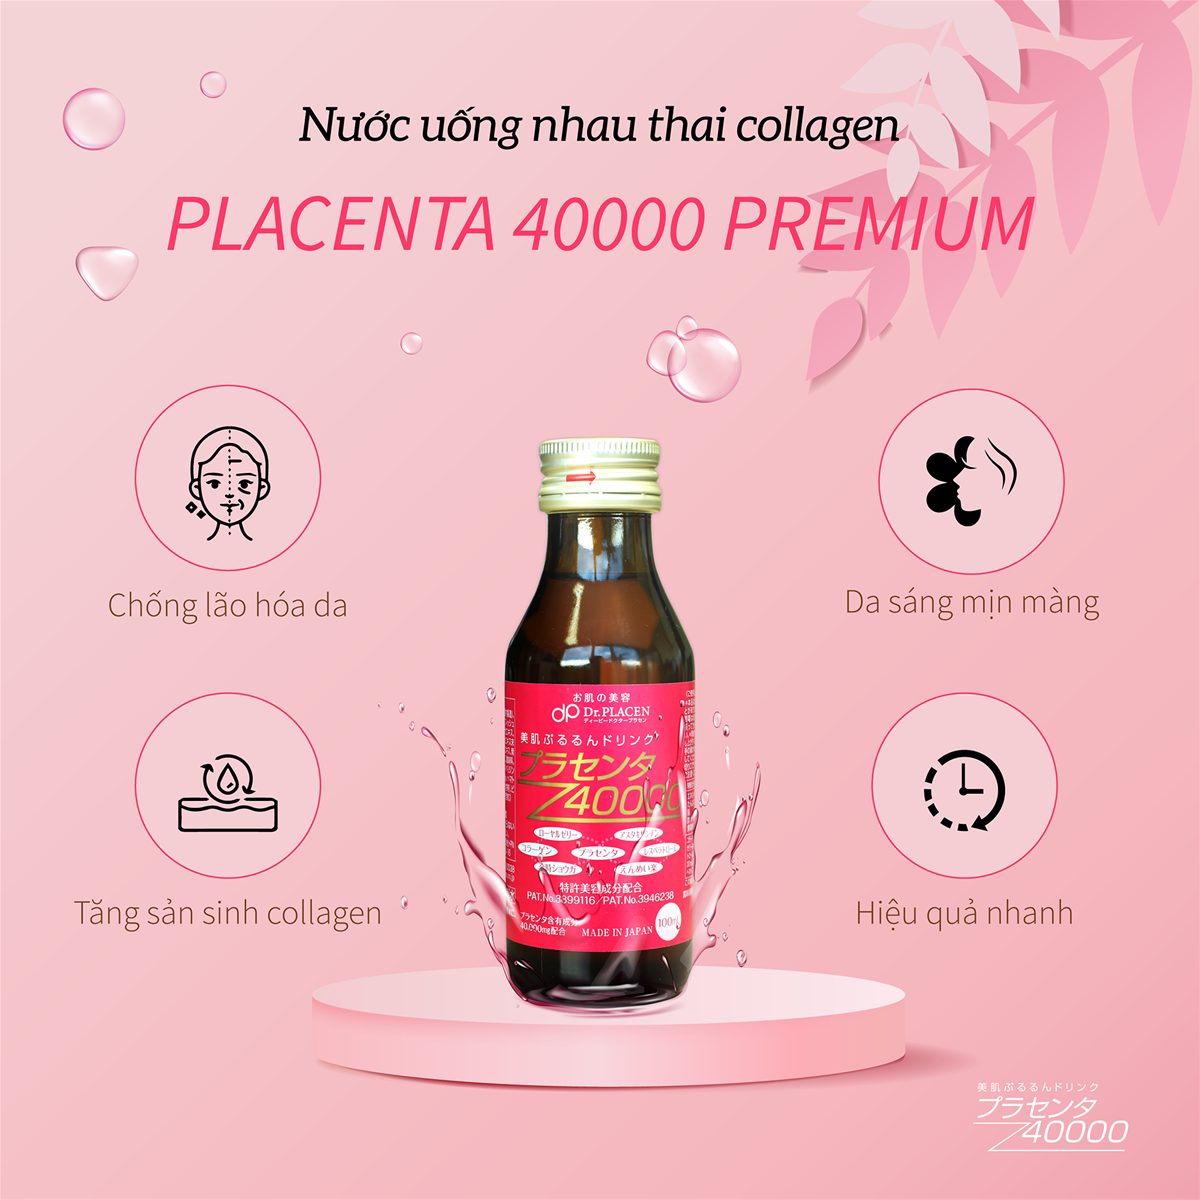 Nước uống nhau thai collagen Placenta 40000 Nhật Bản